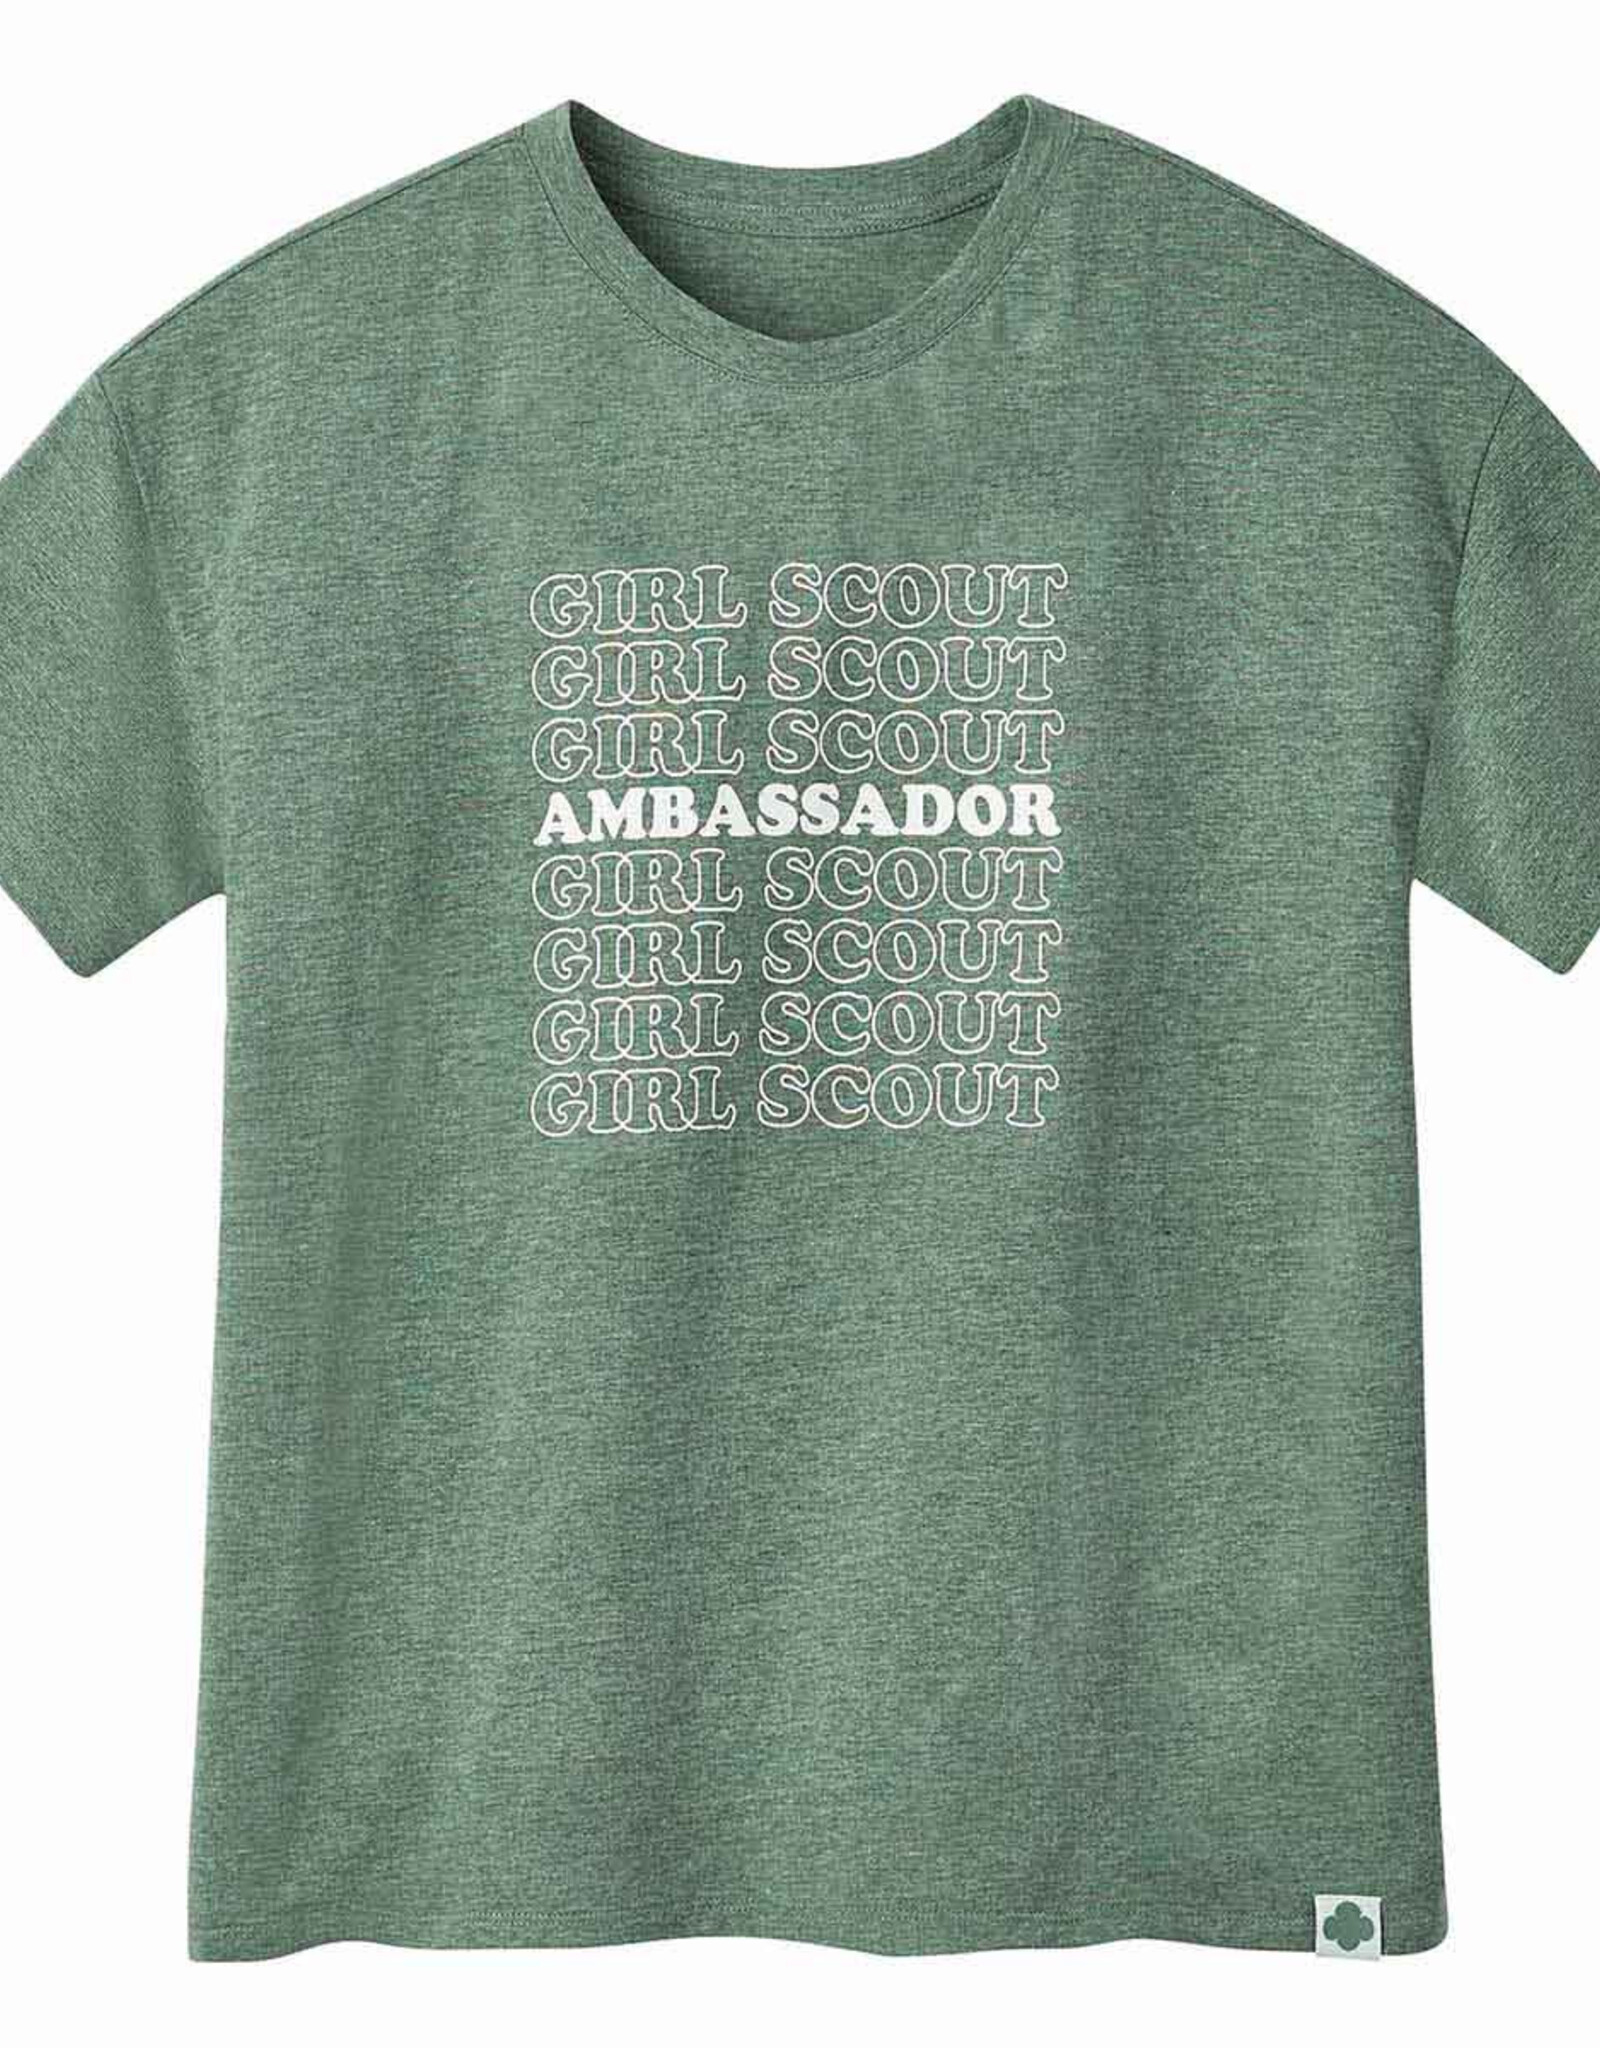 GSUSA Ambassador Retro Oversized T-Shirt - Women's